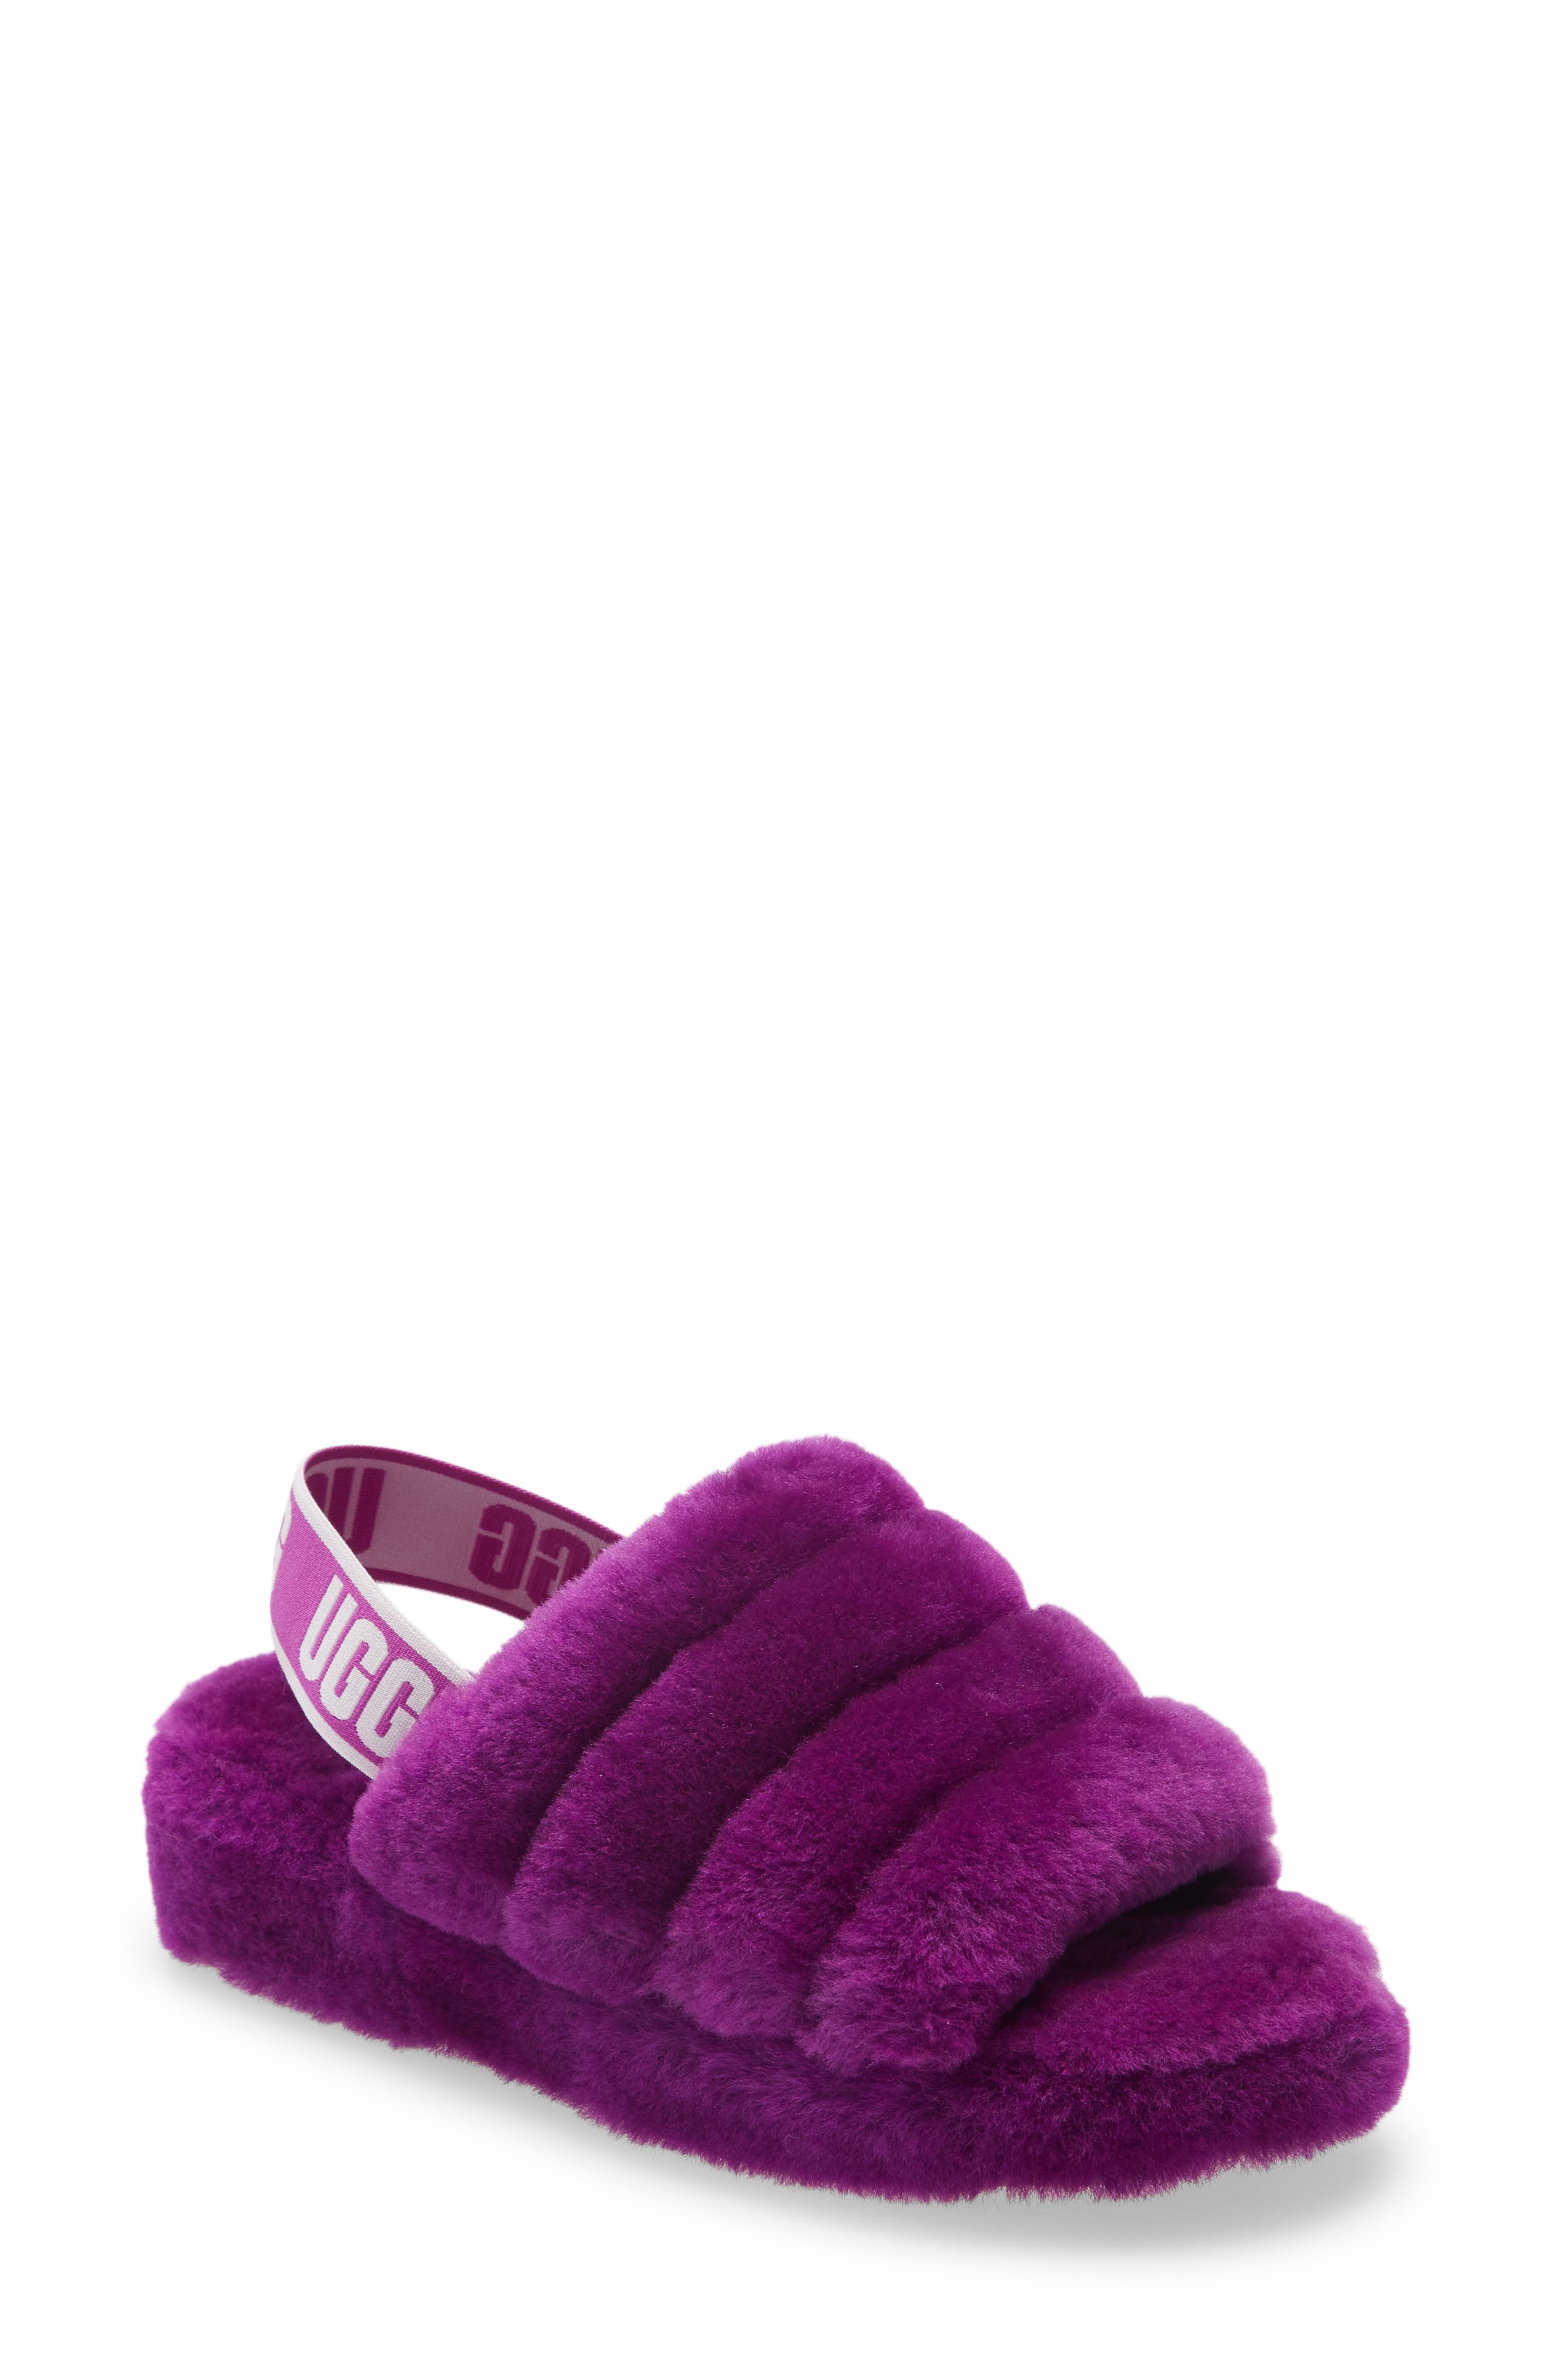 ugg slippers women size 9